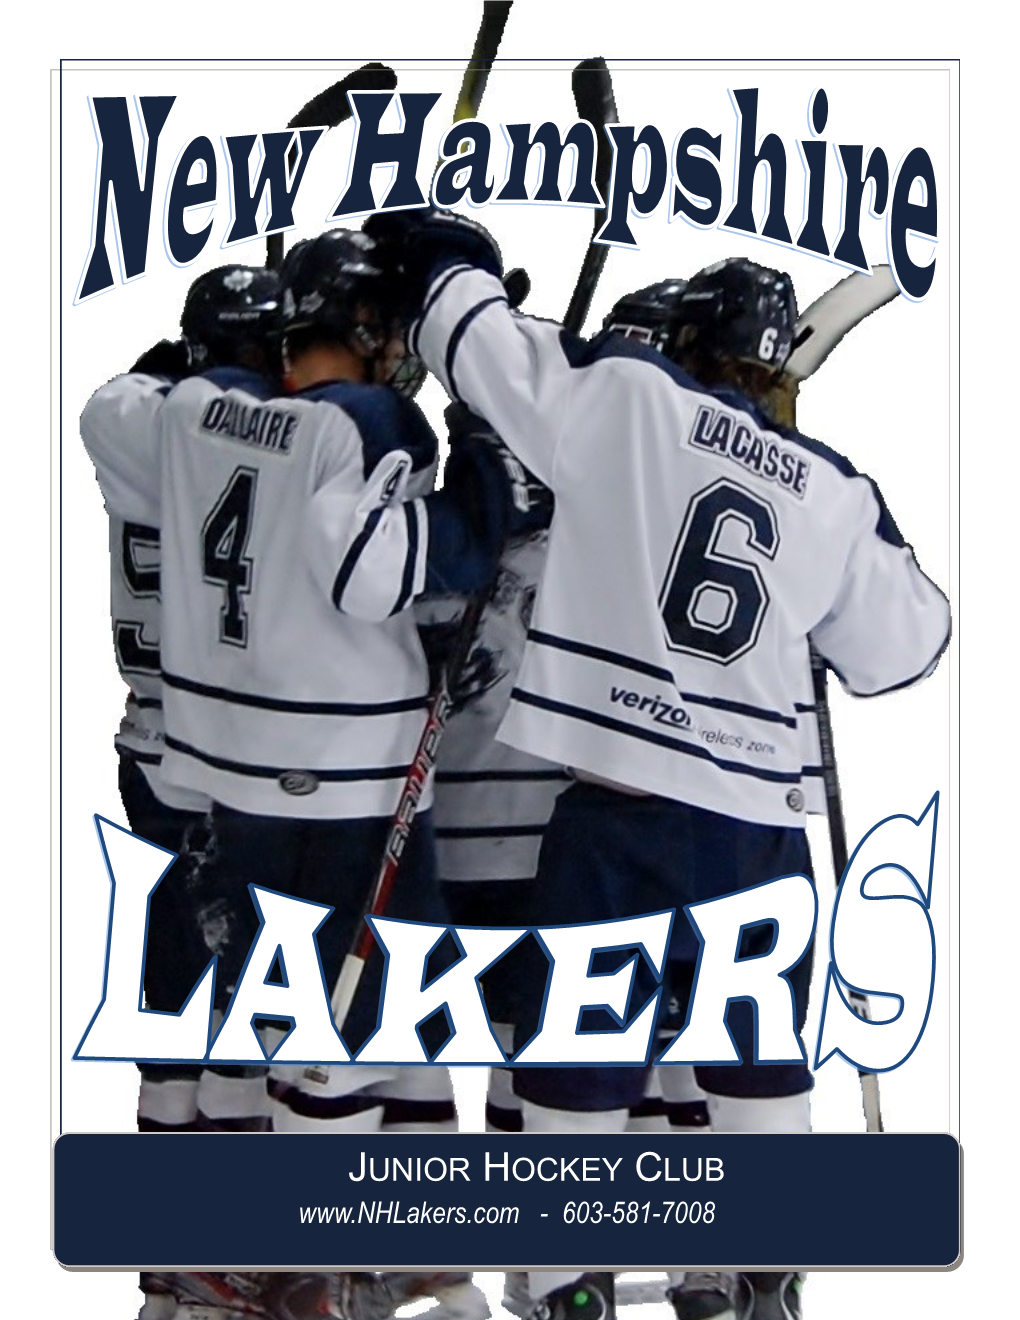 Junior Hockey Club - 603-581-7008 New Hampshire Lakers  the Program